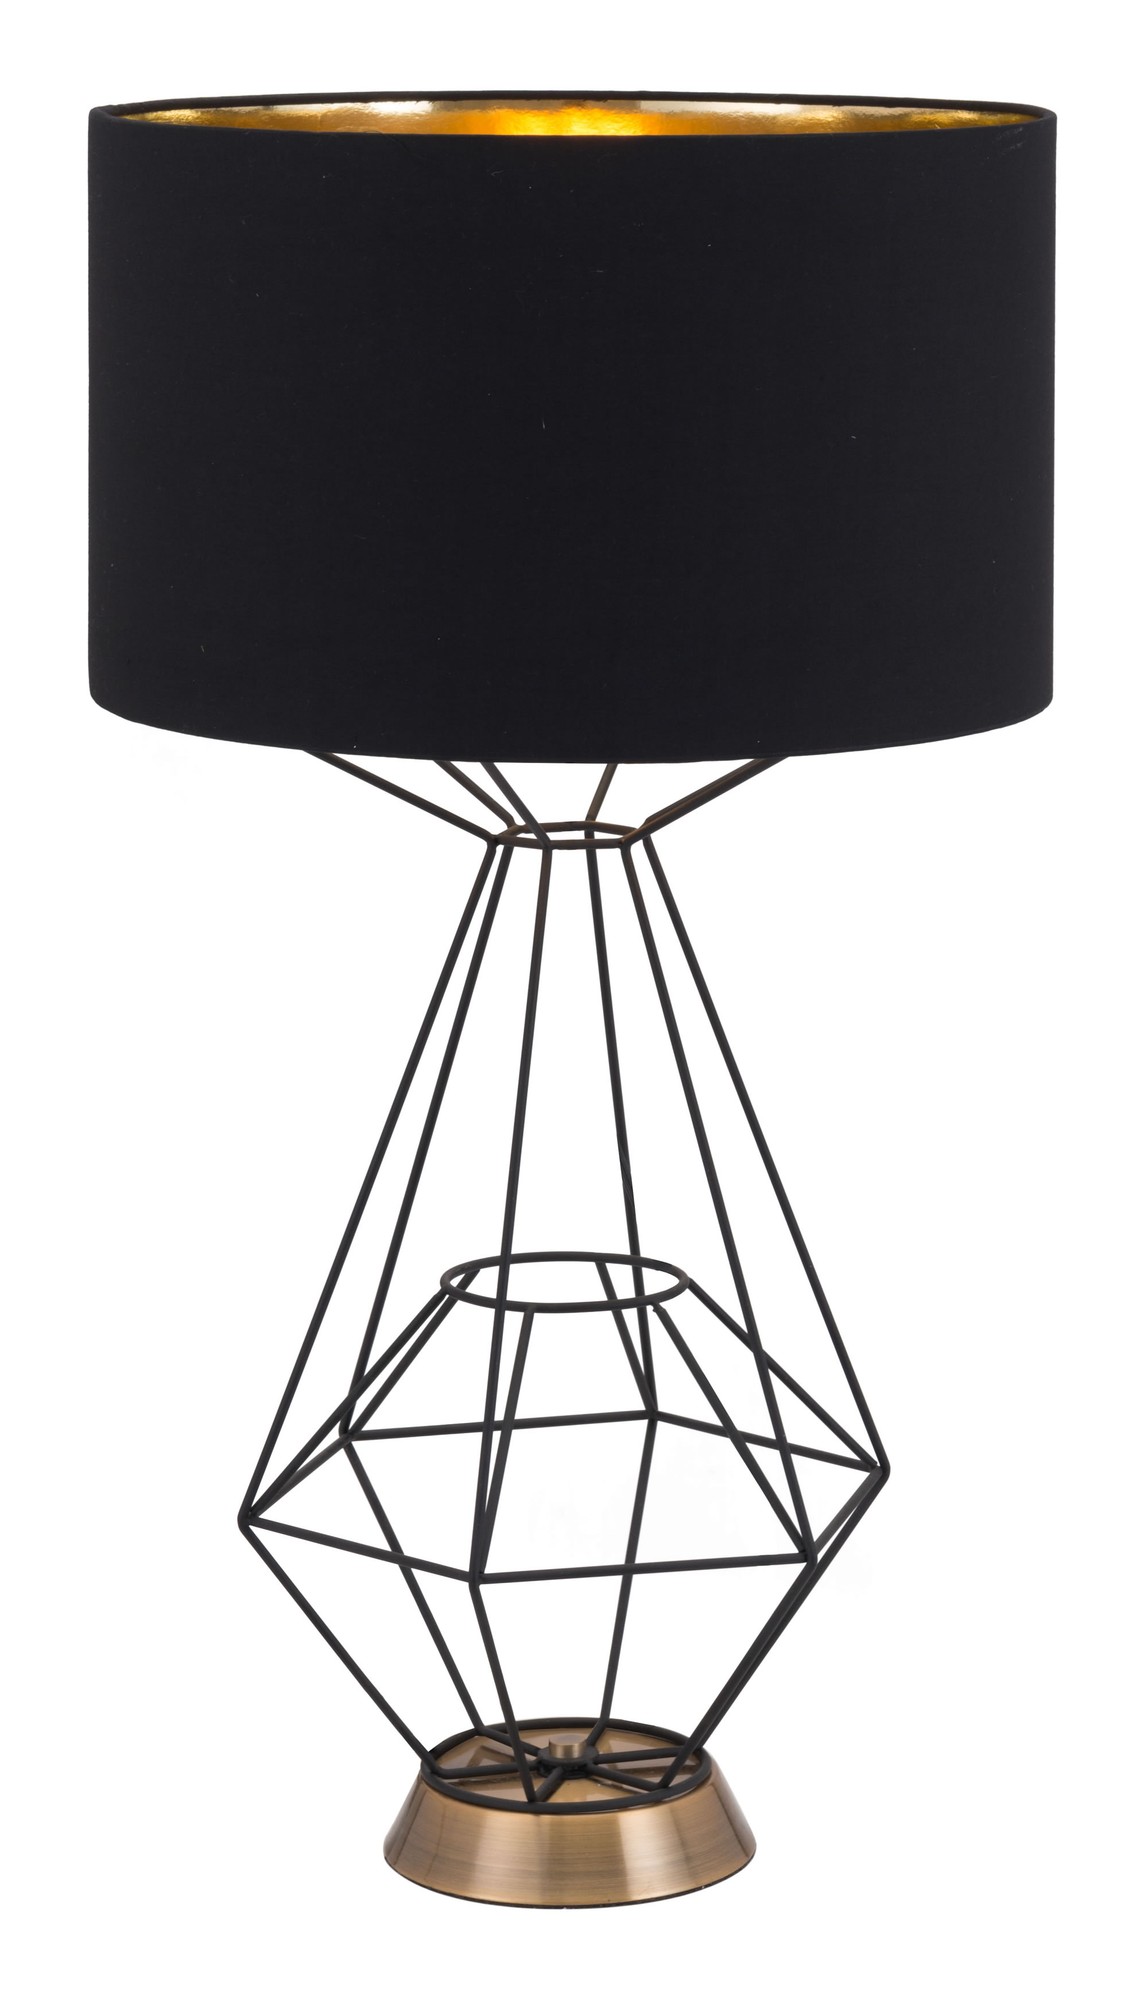 15" x 15" x 28" Black, Polyblend, Steel, Table Lamp